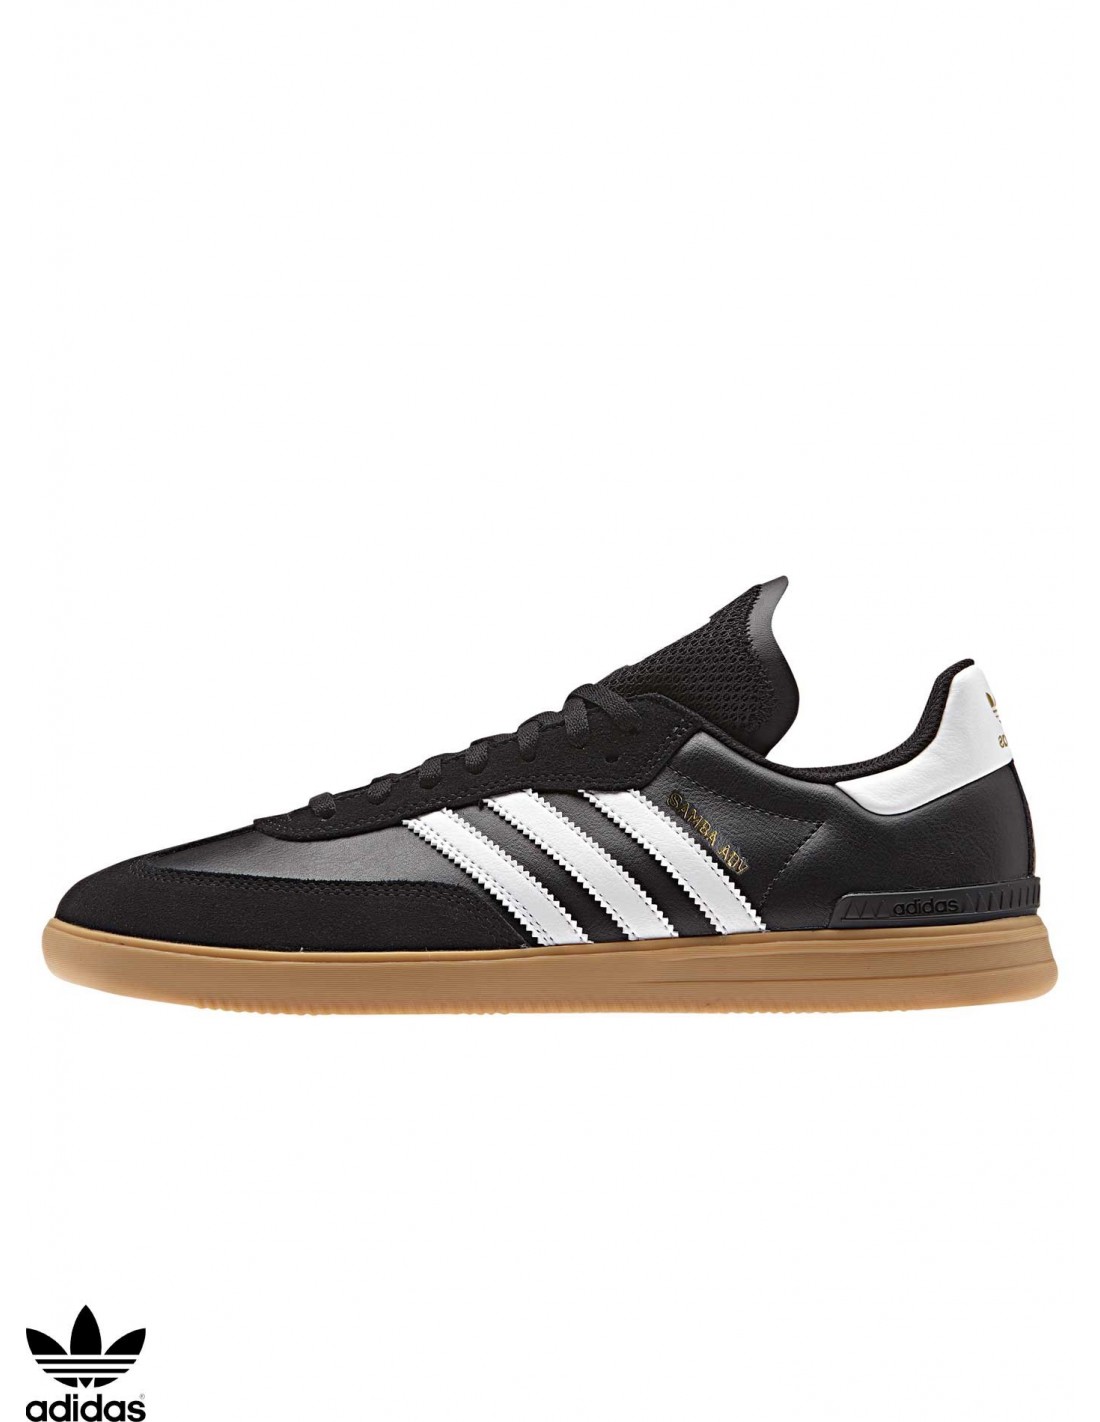 Adidas Samba ADV Black / Gum Skate Shoes